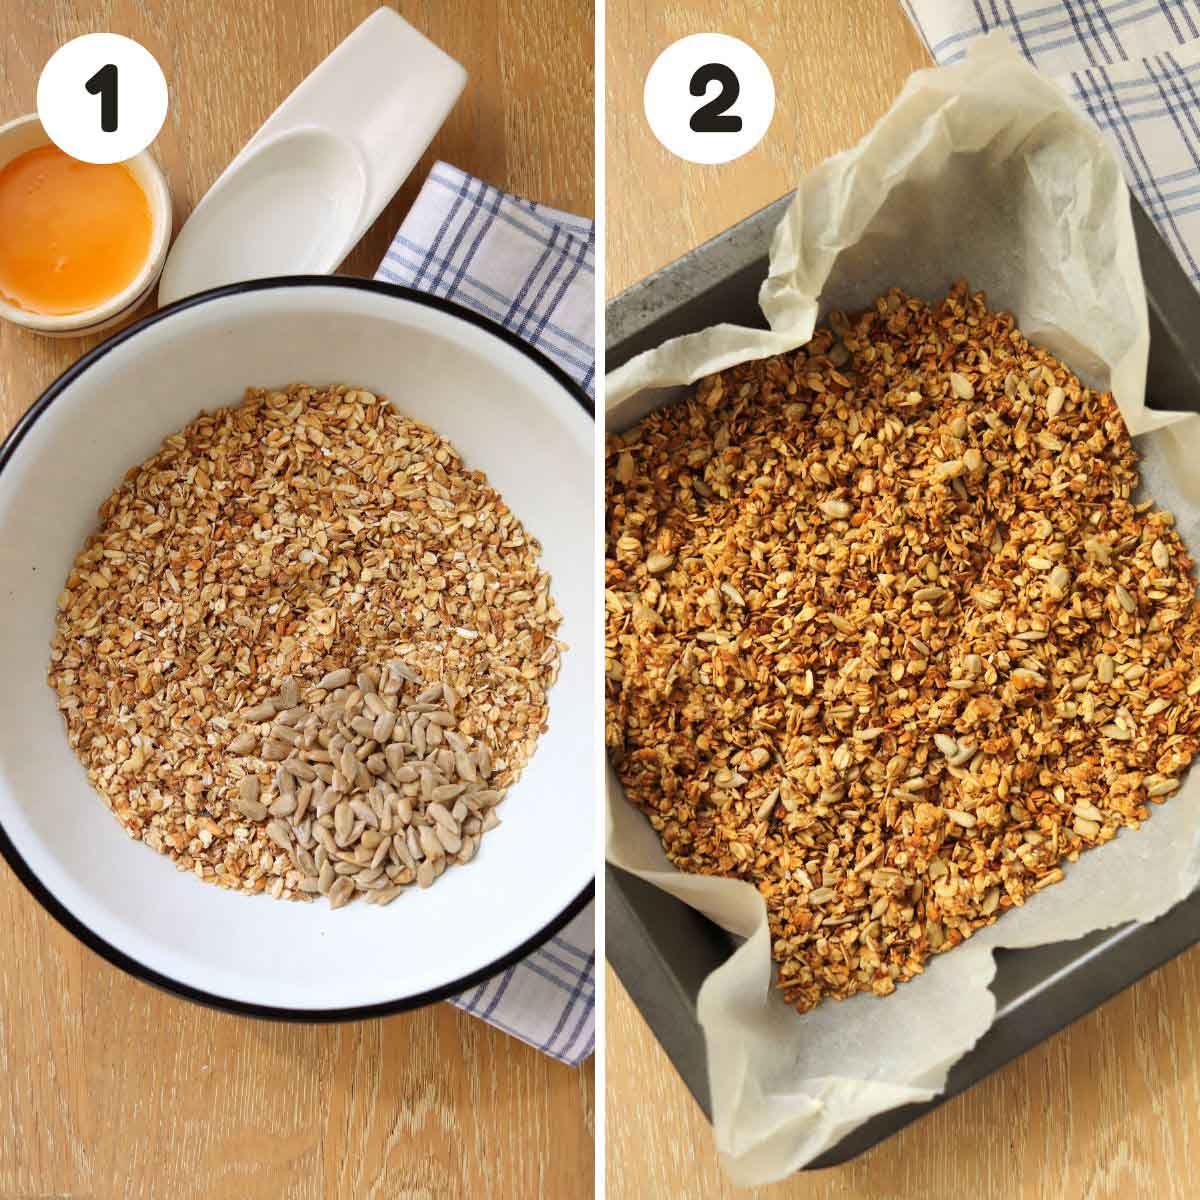 Steps to make the granola.